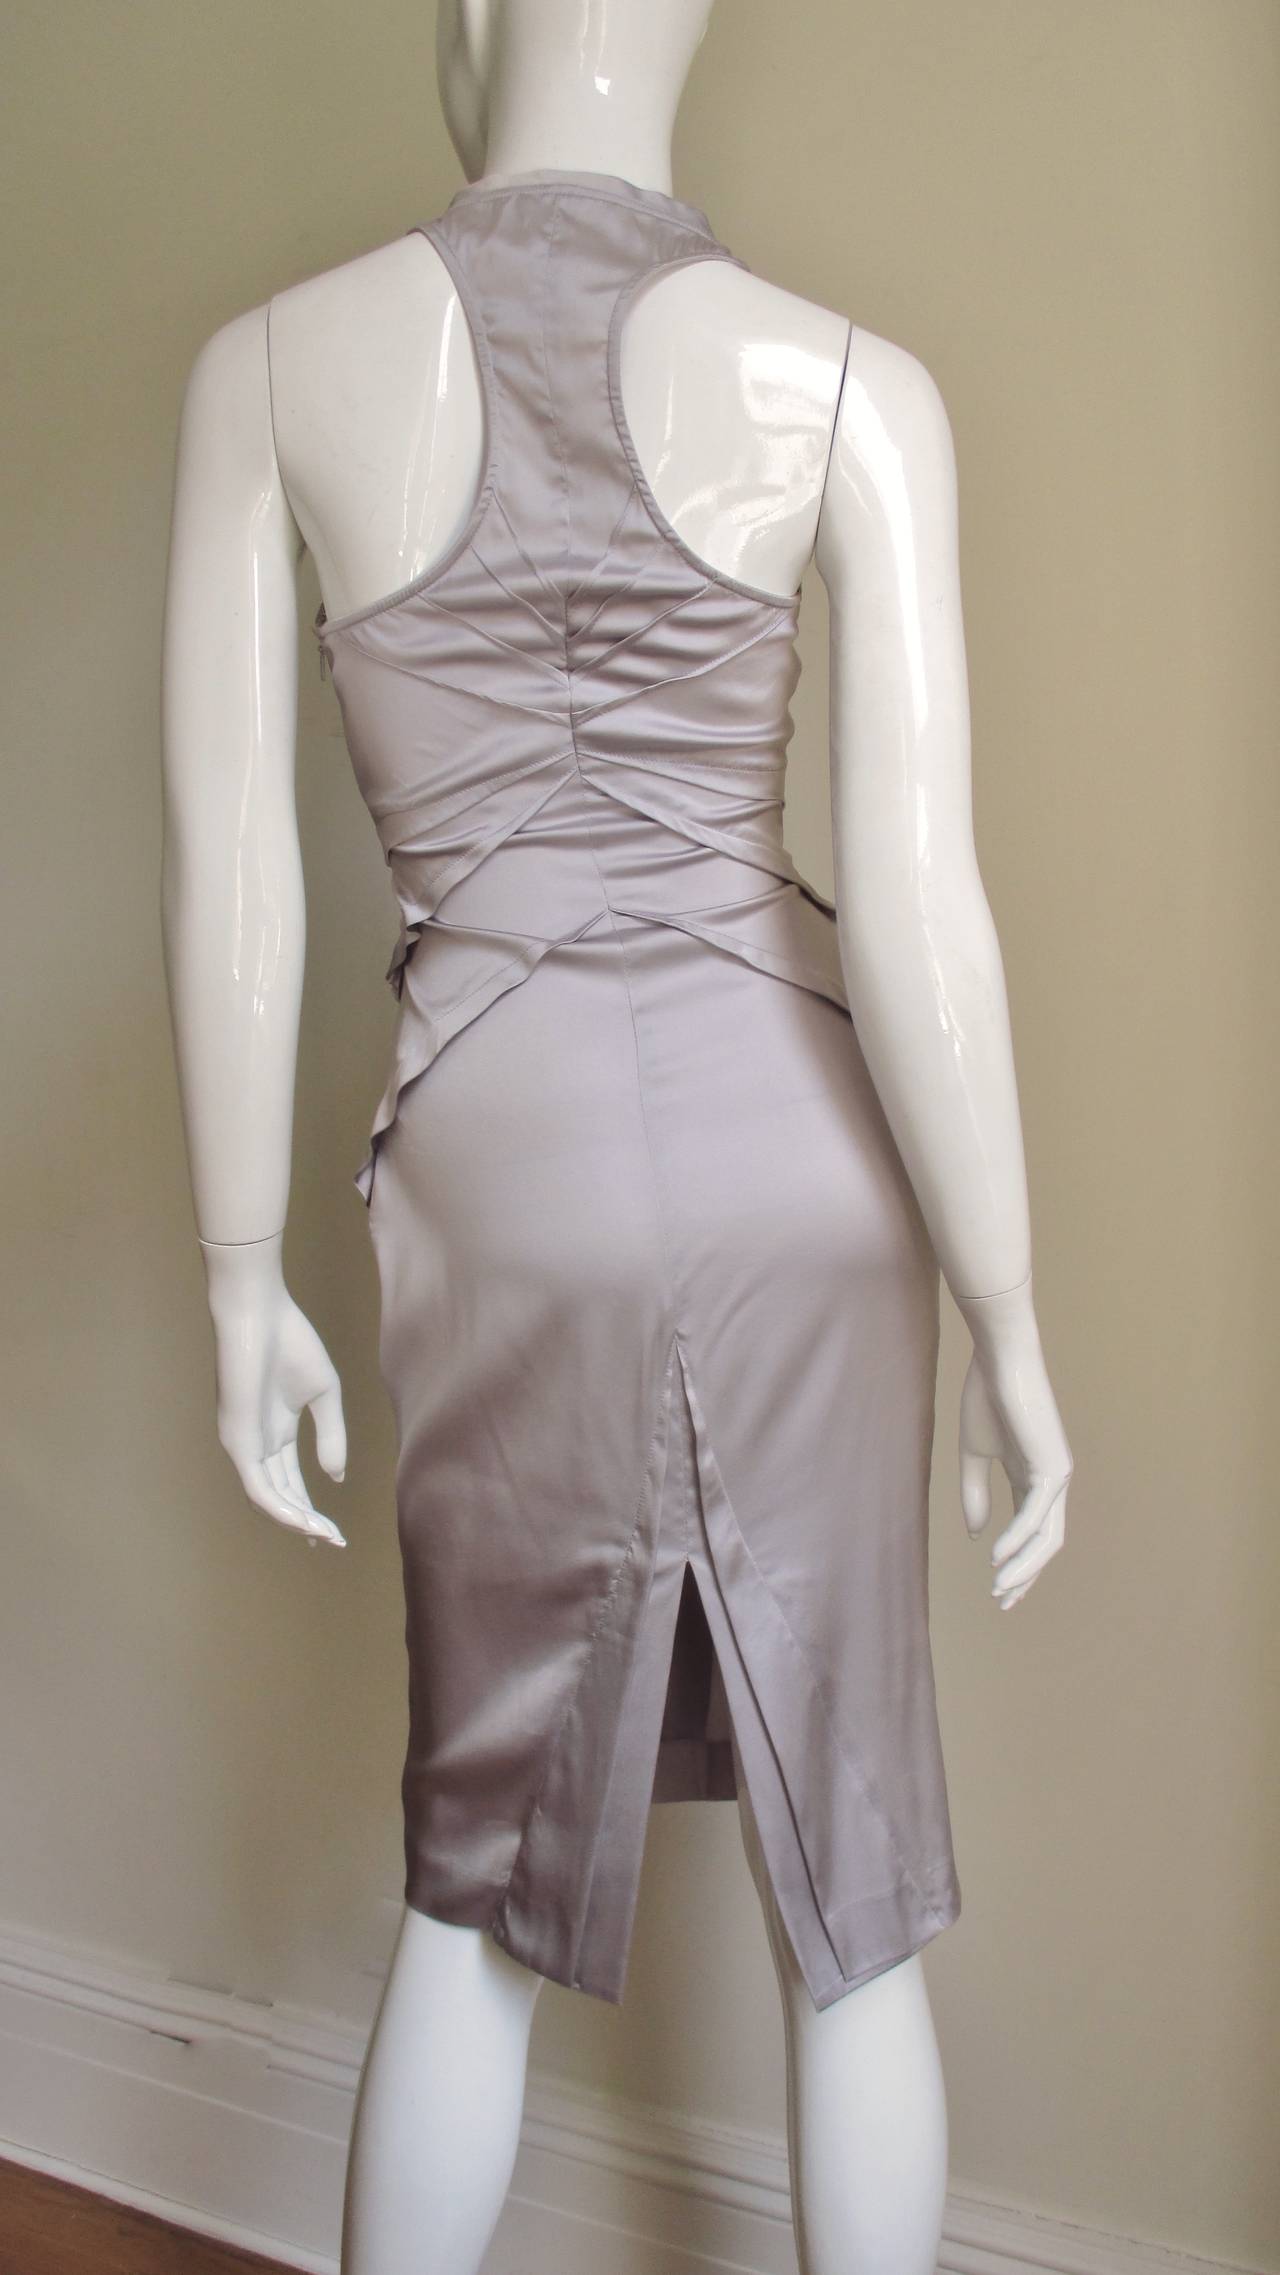  Tom Ford for Gucci Lavender Silk Halter Dress S/S 2003 For Sale 2